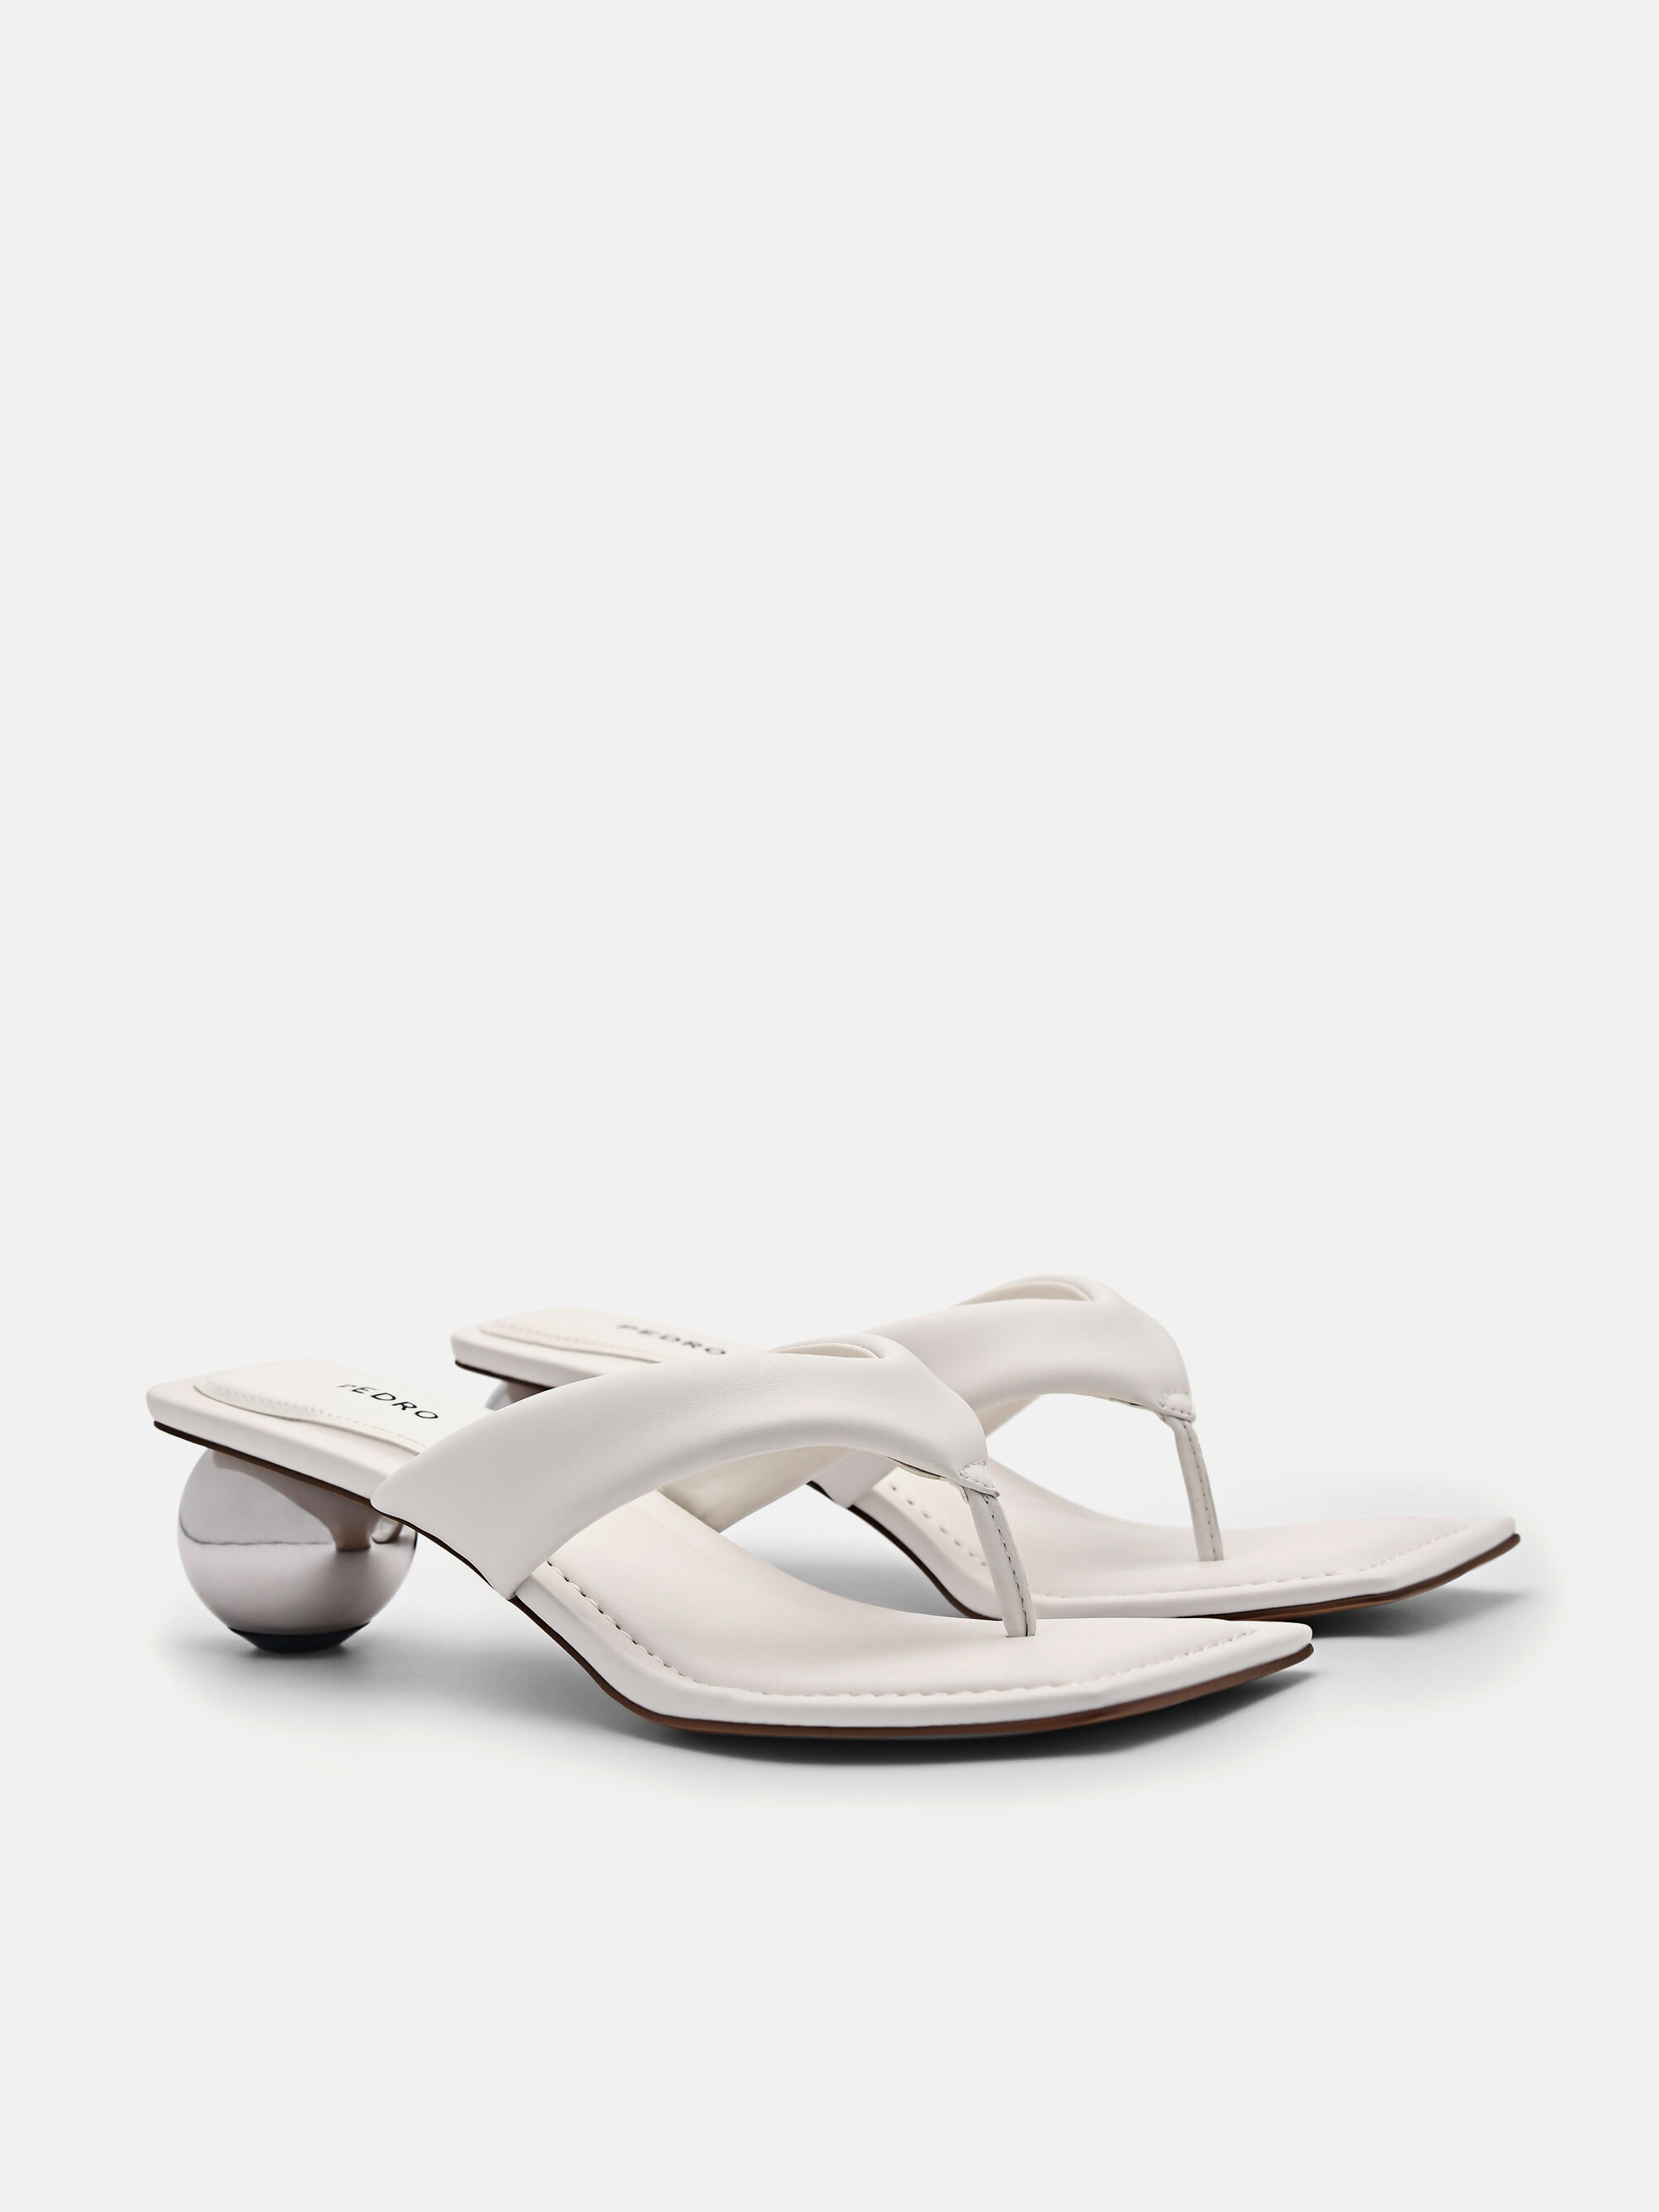 Vibe Heel Sandals, White